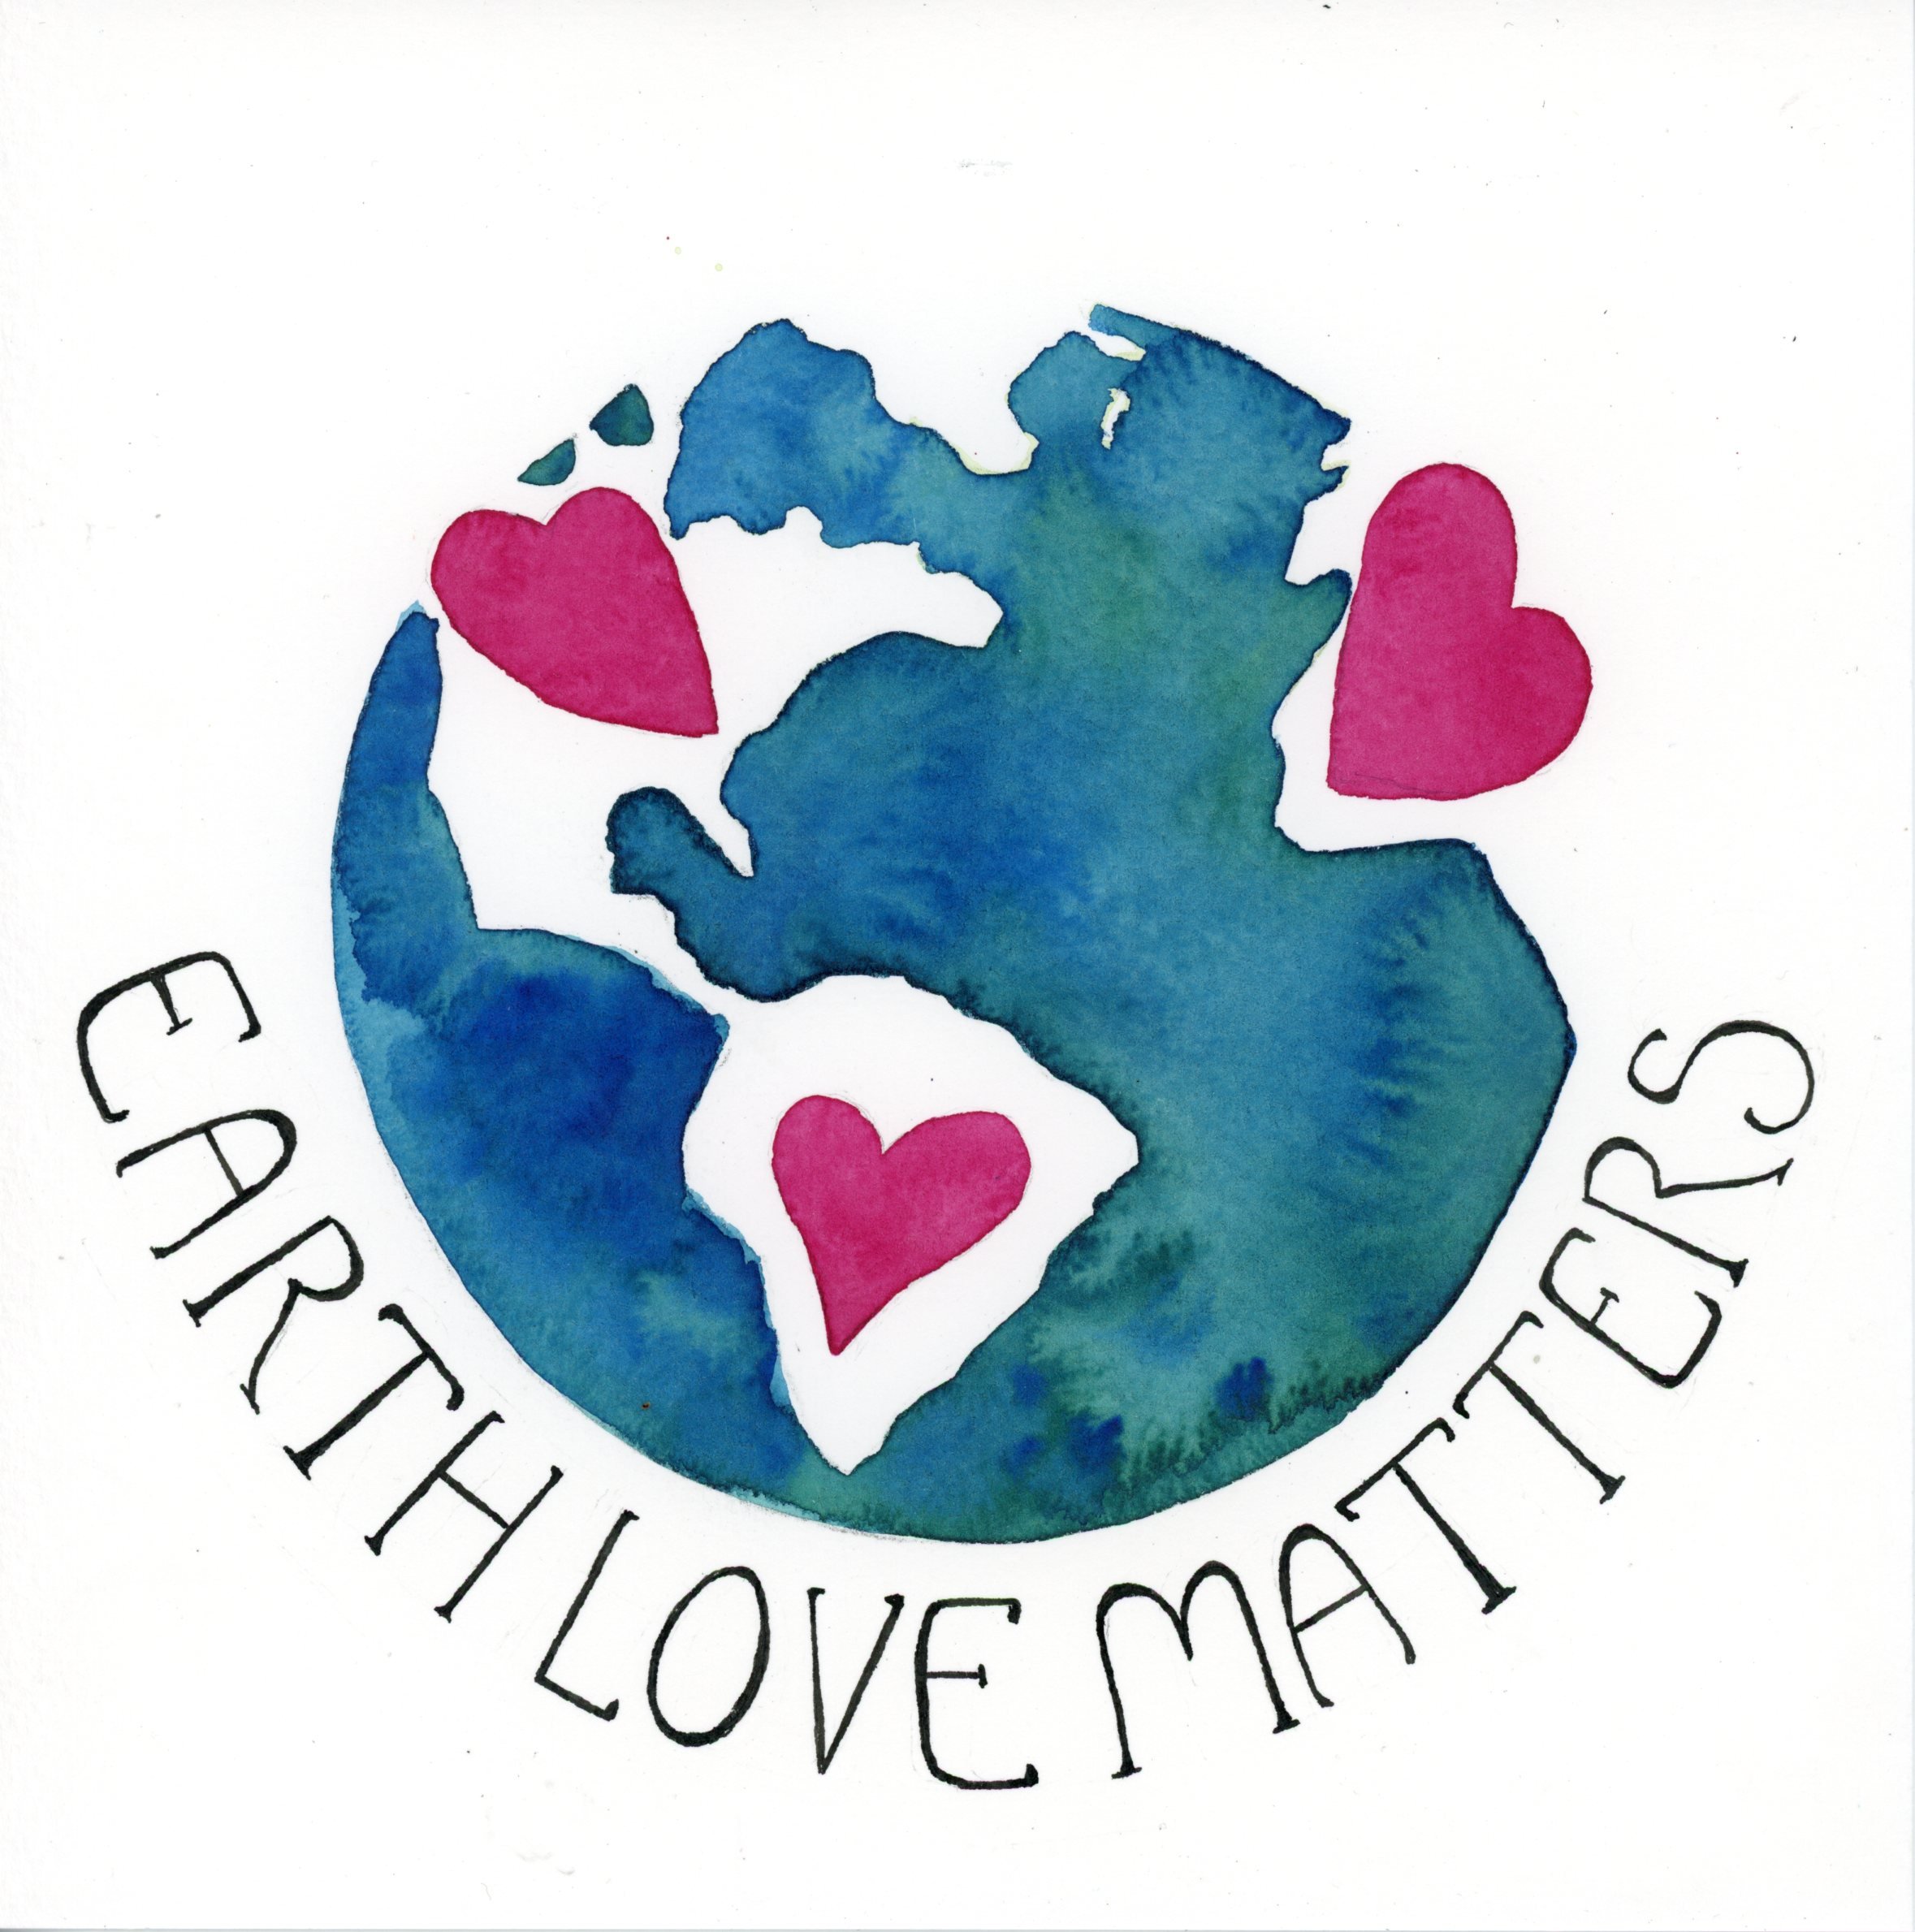 earth love matters logo 2021.jpg